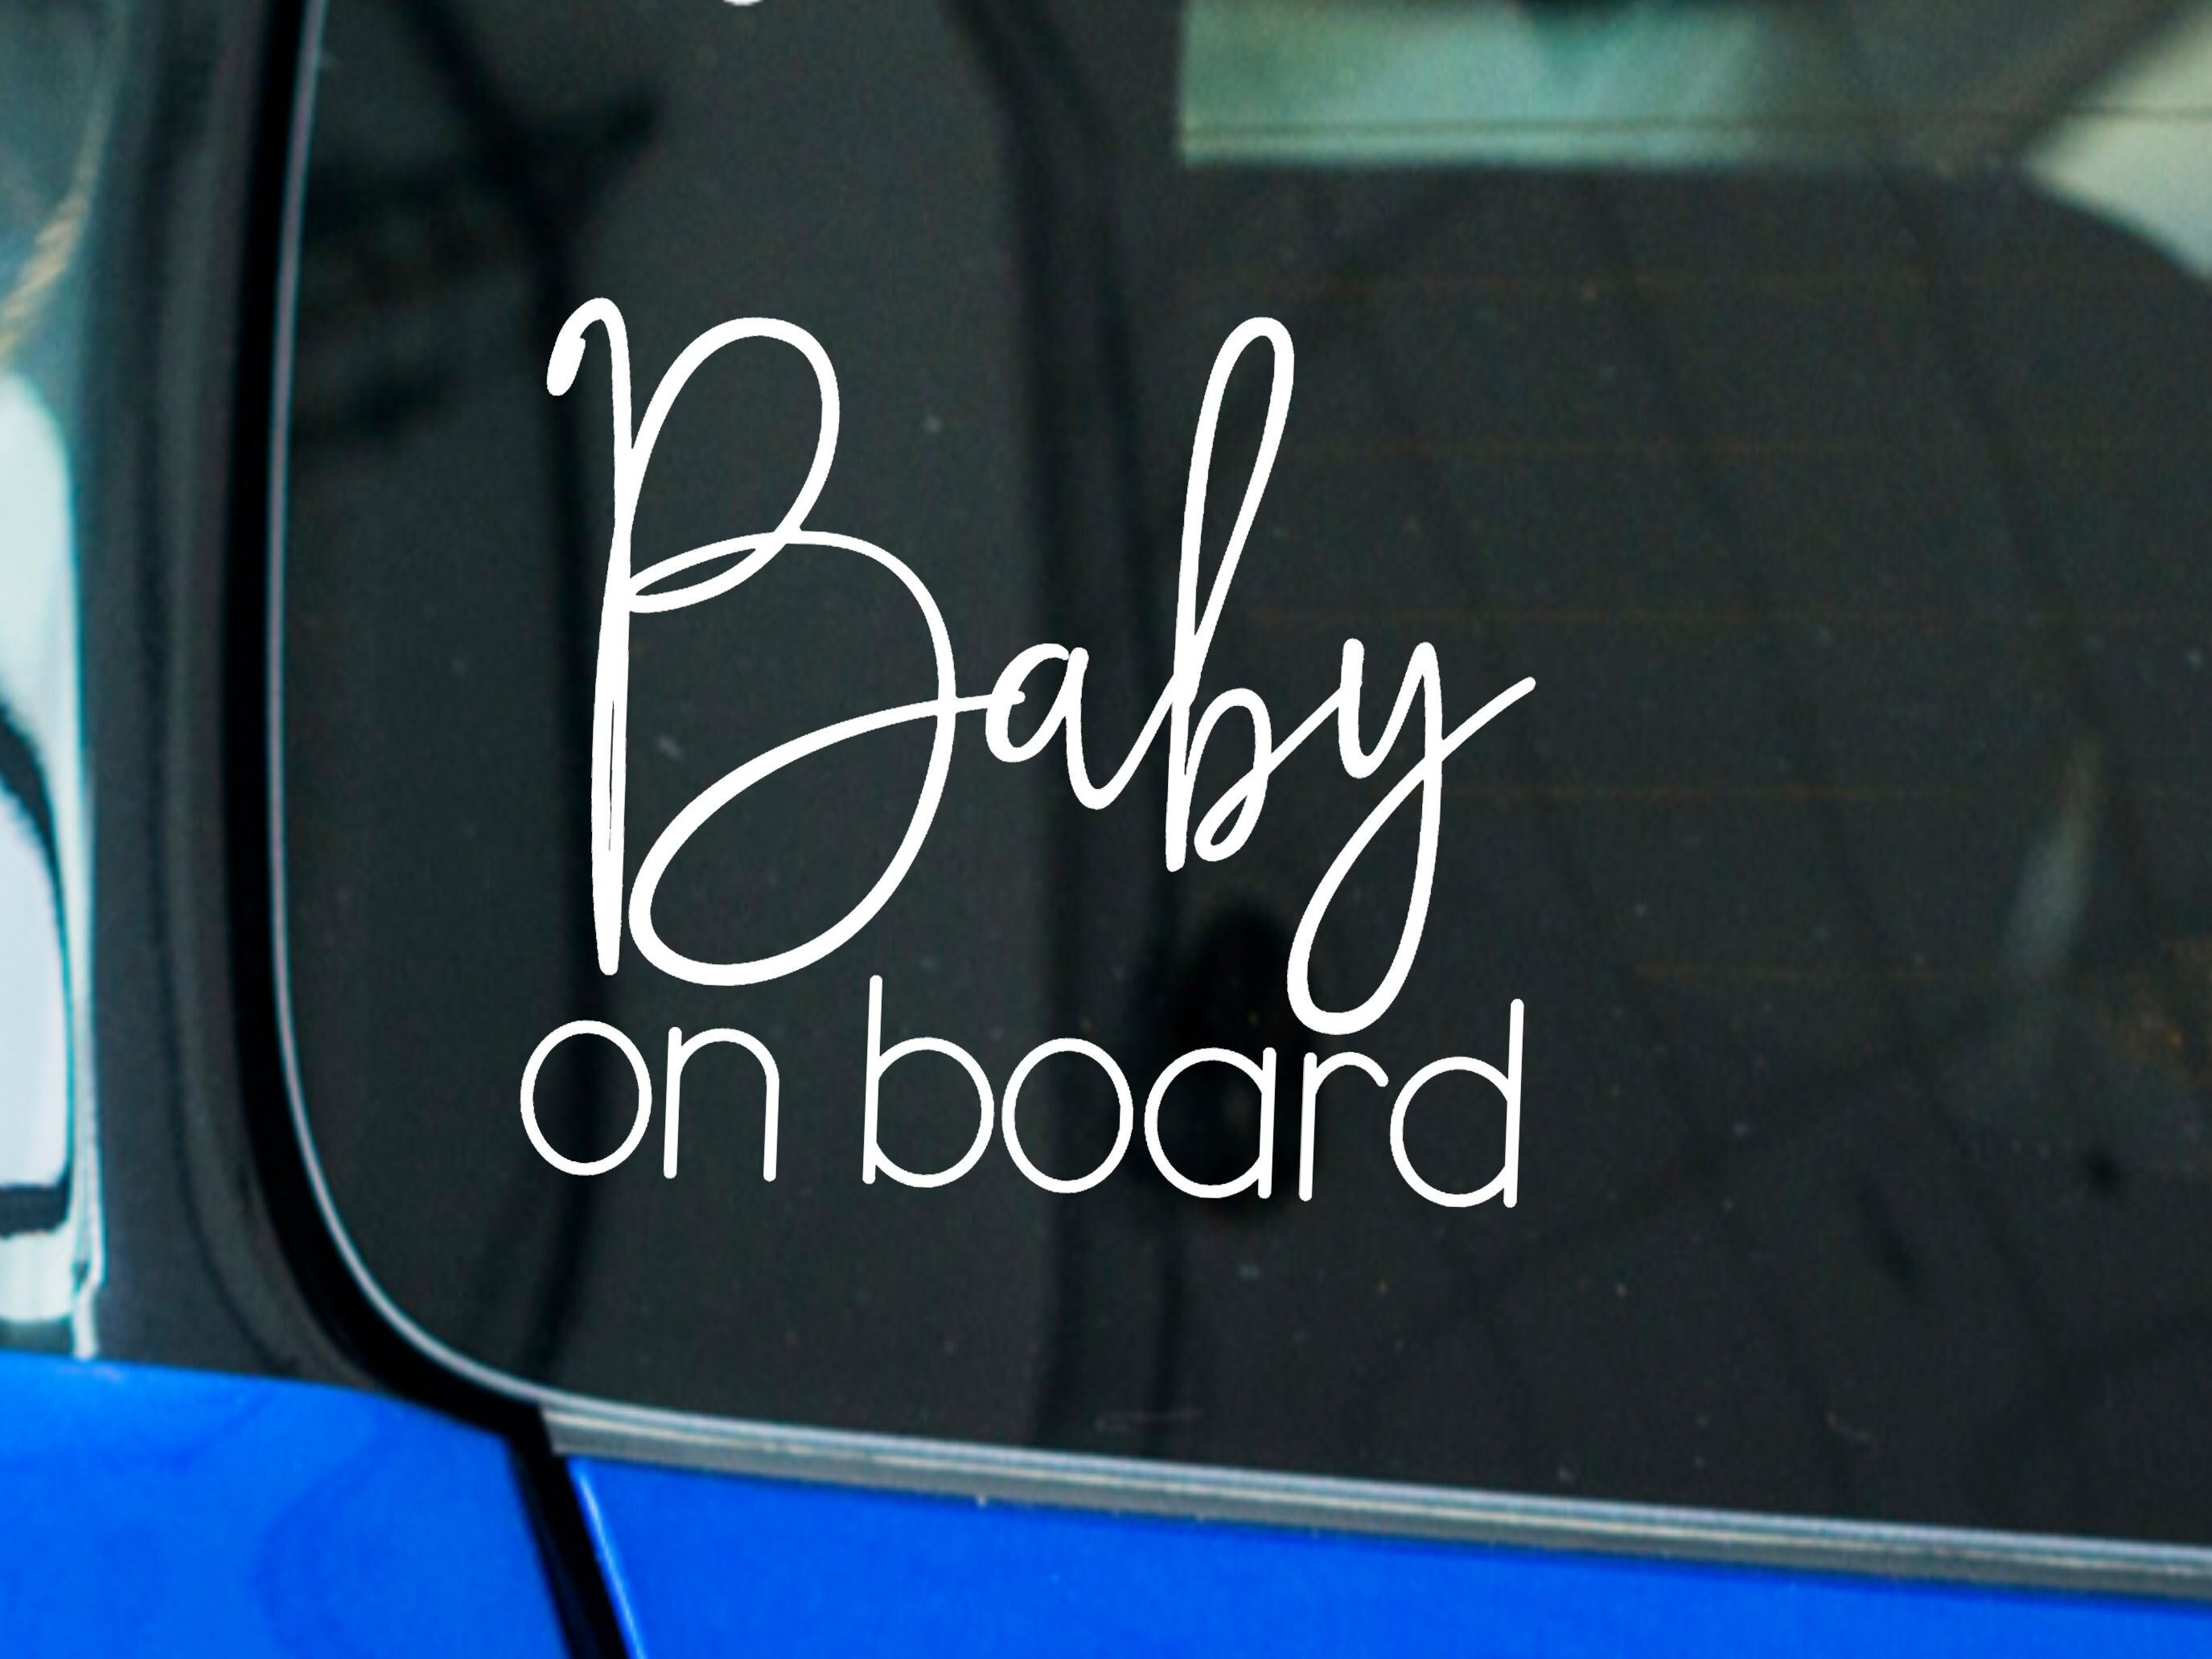 Stickeraffe Auto Aufkleber Baby an Board Baby an Bord, 8,99 €